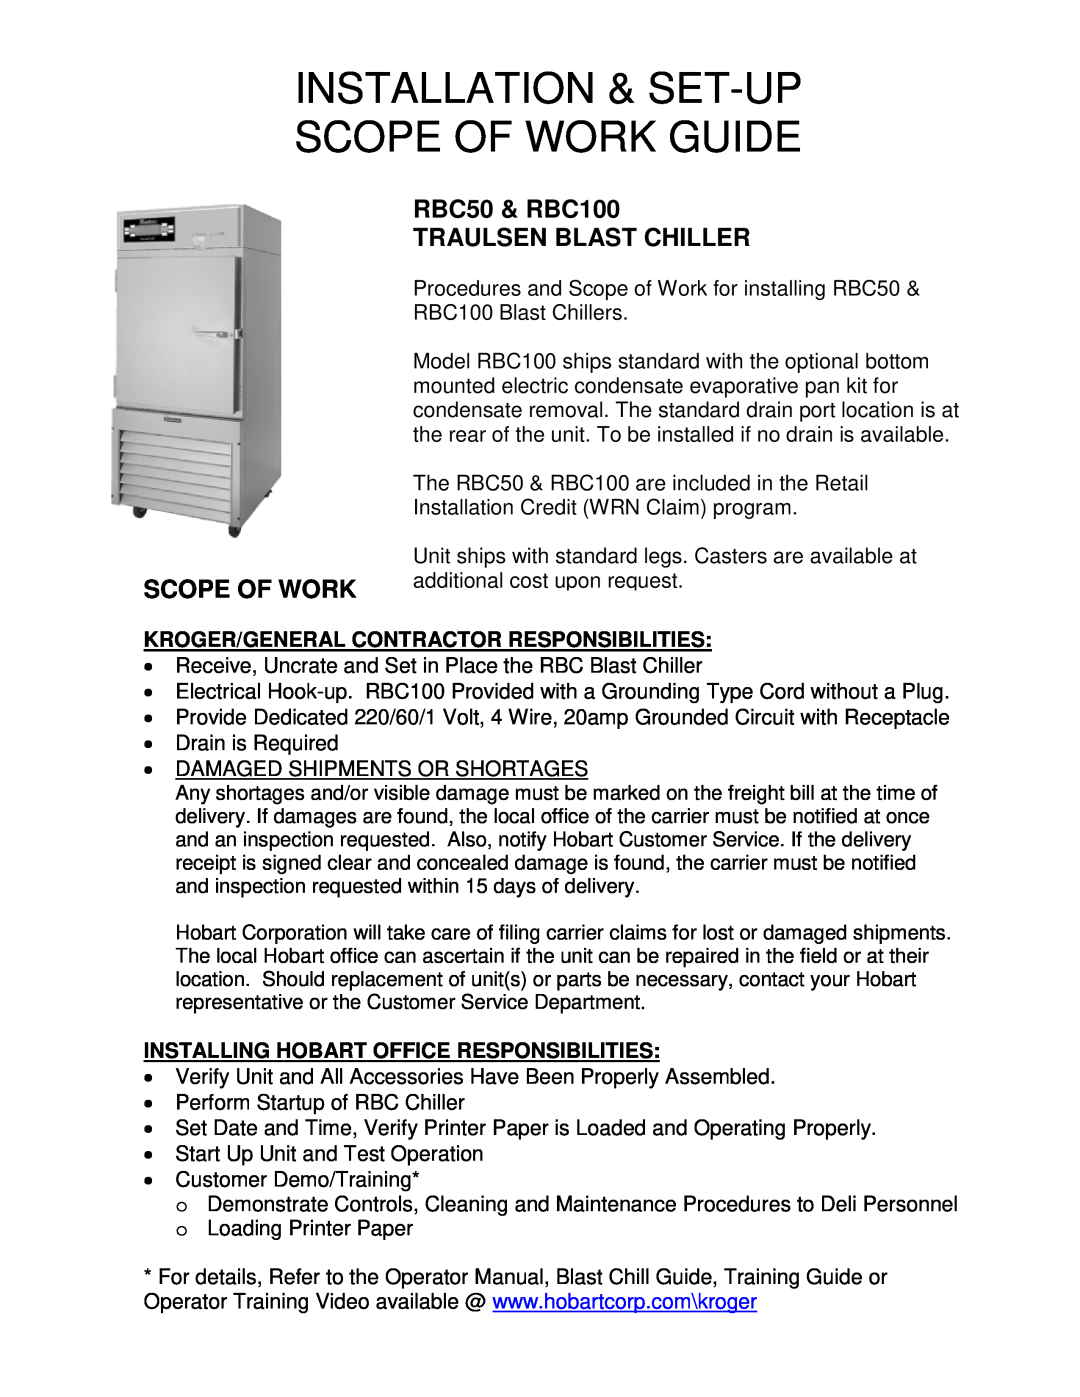 Hobart manual Installation & Set-Upscope Of Work Guide, RBC50 & RBC100 TRAULSEN BLAST CHILLER, Scope Of Work 